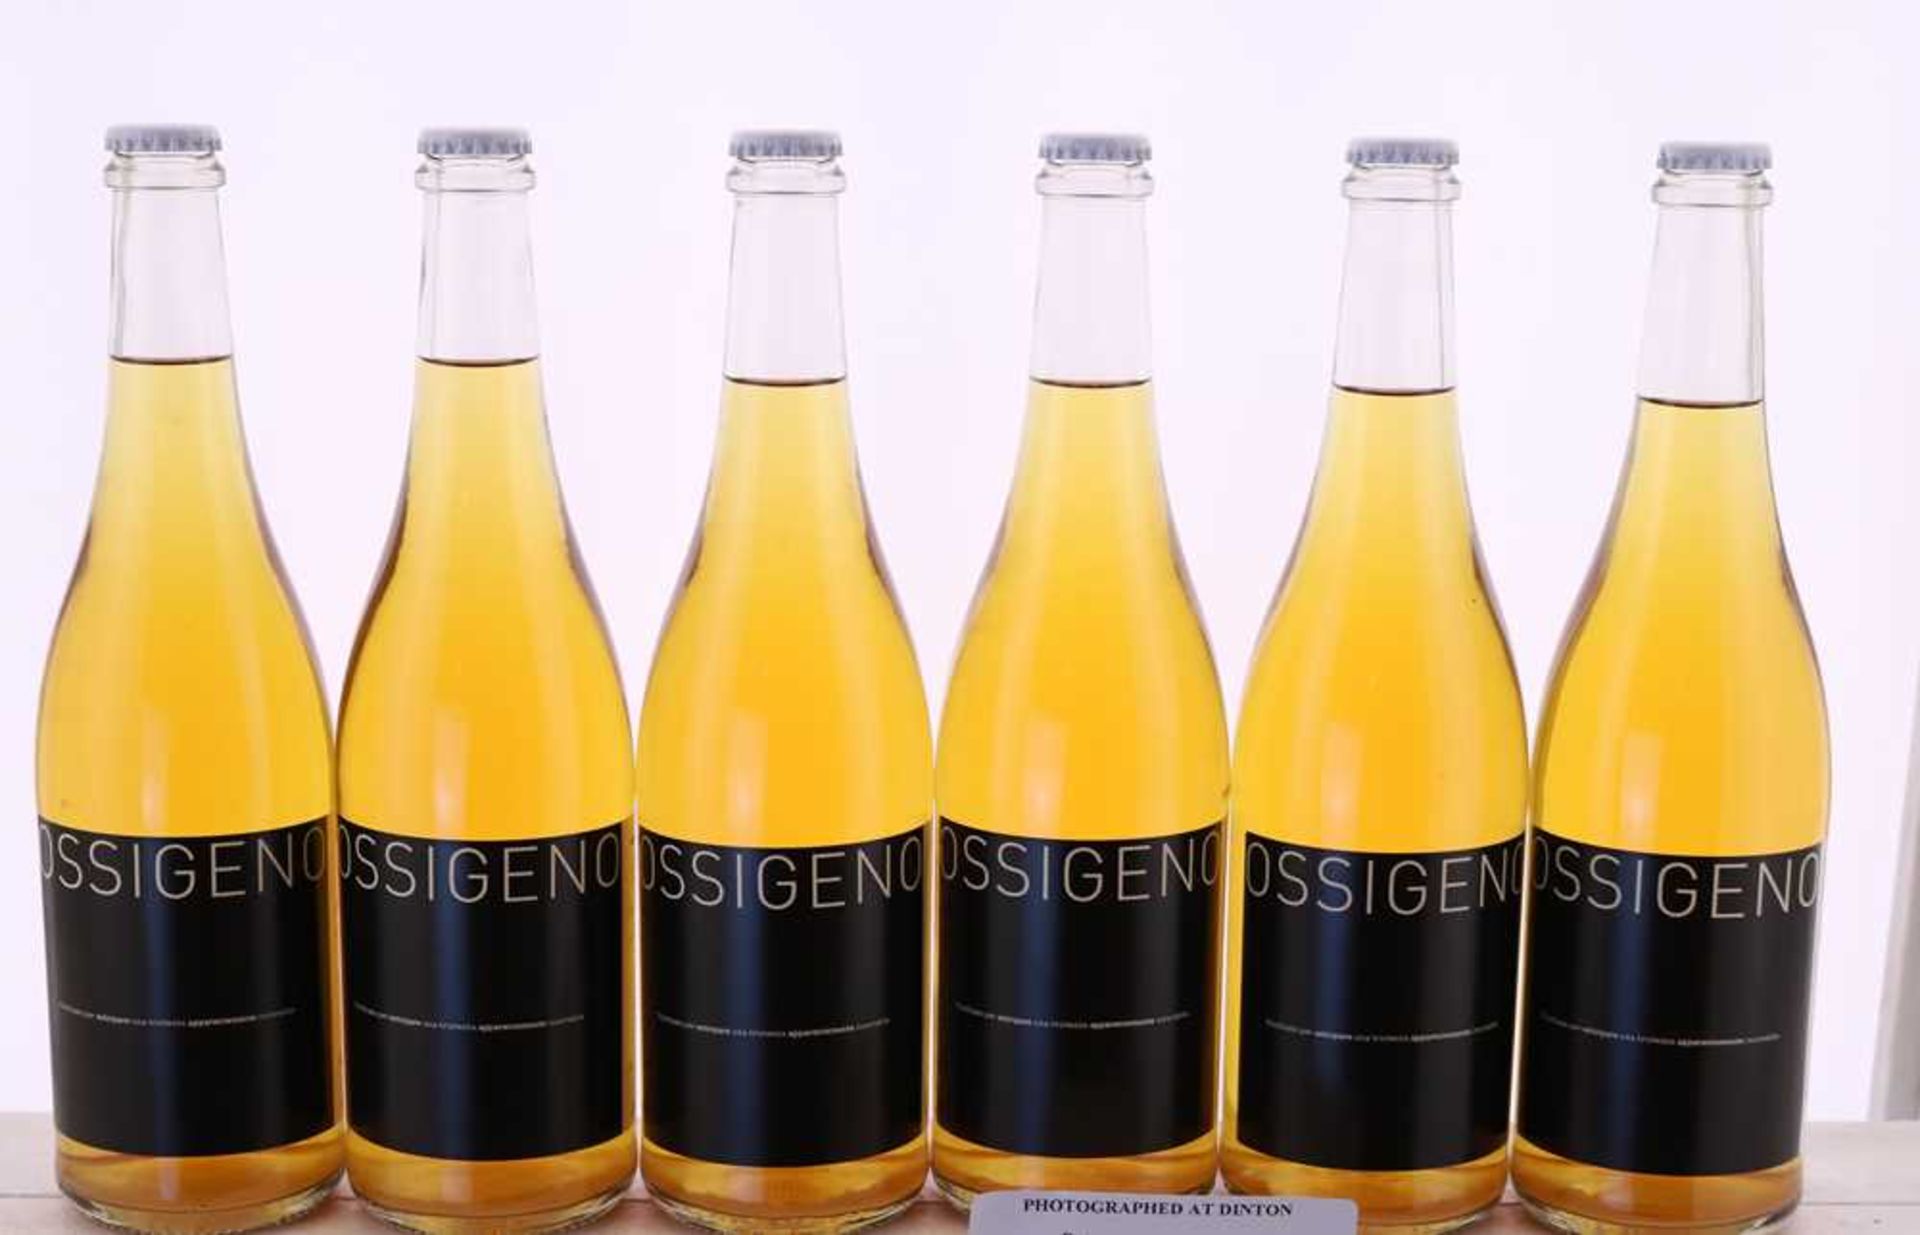 Ossigeno, Beneventano Bianco IGT, Robb de Matt, Campania, Italy, Non-Vintage, twelve bottles